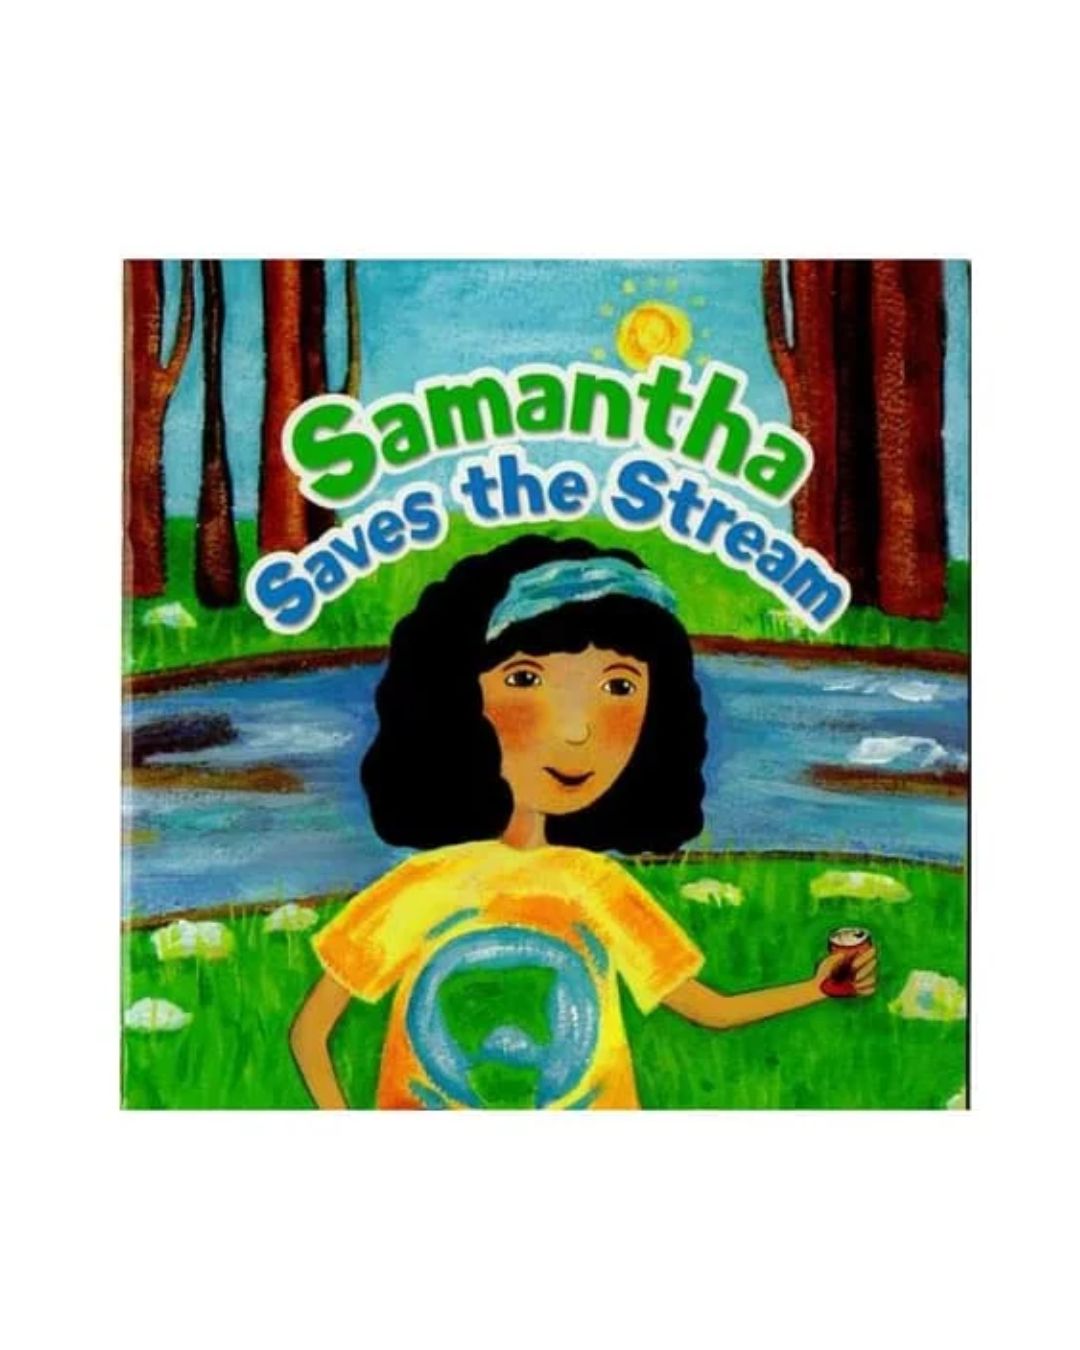 Samantha saves the stream by john manos - Paper Back - Original